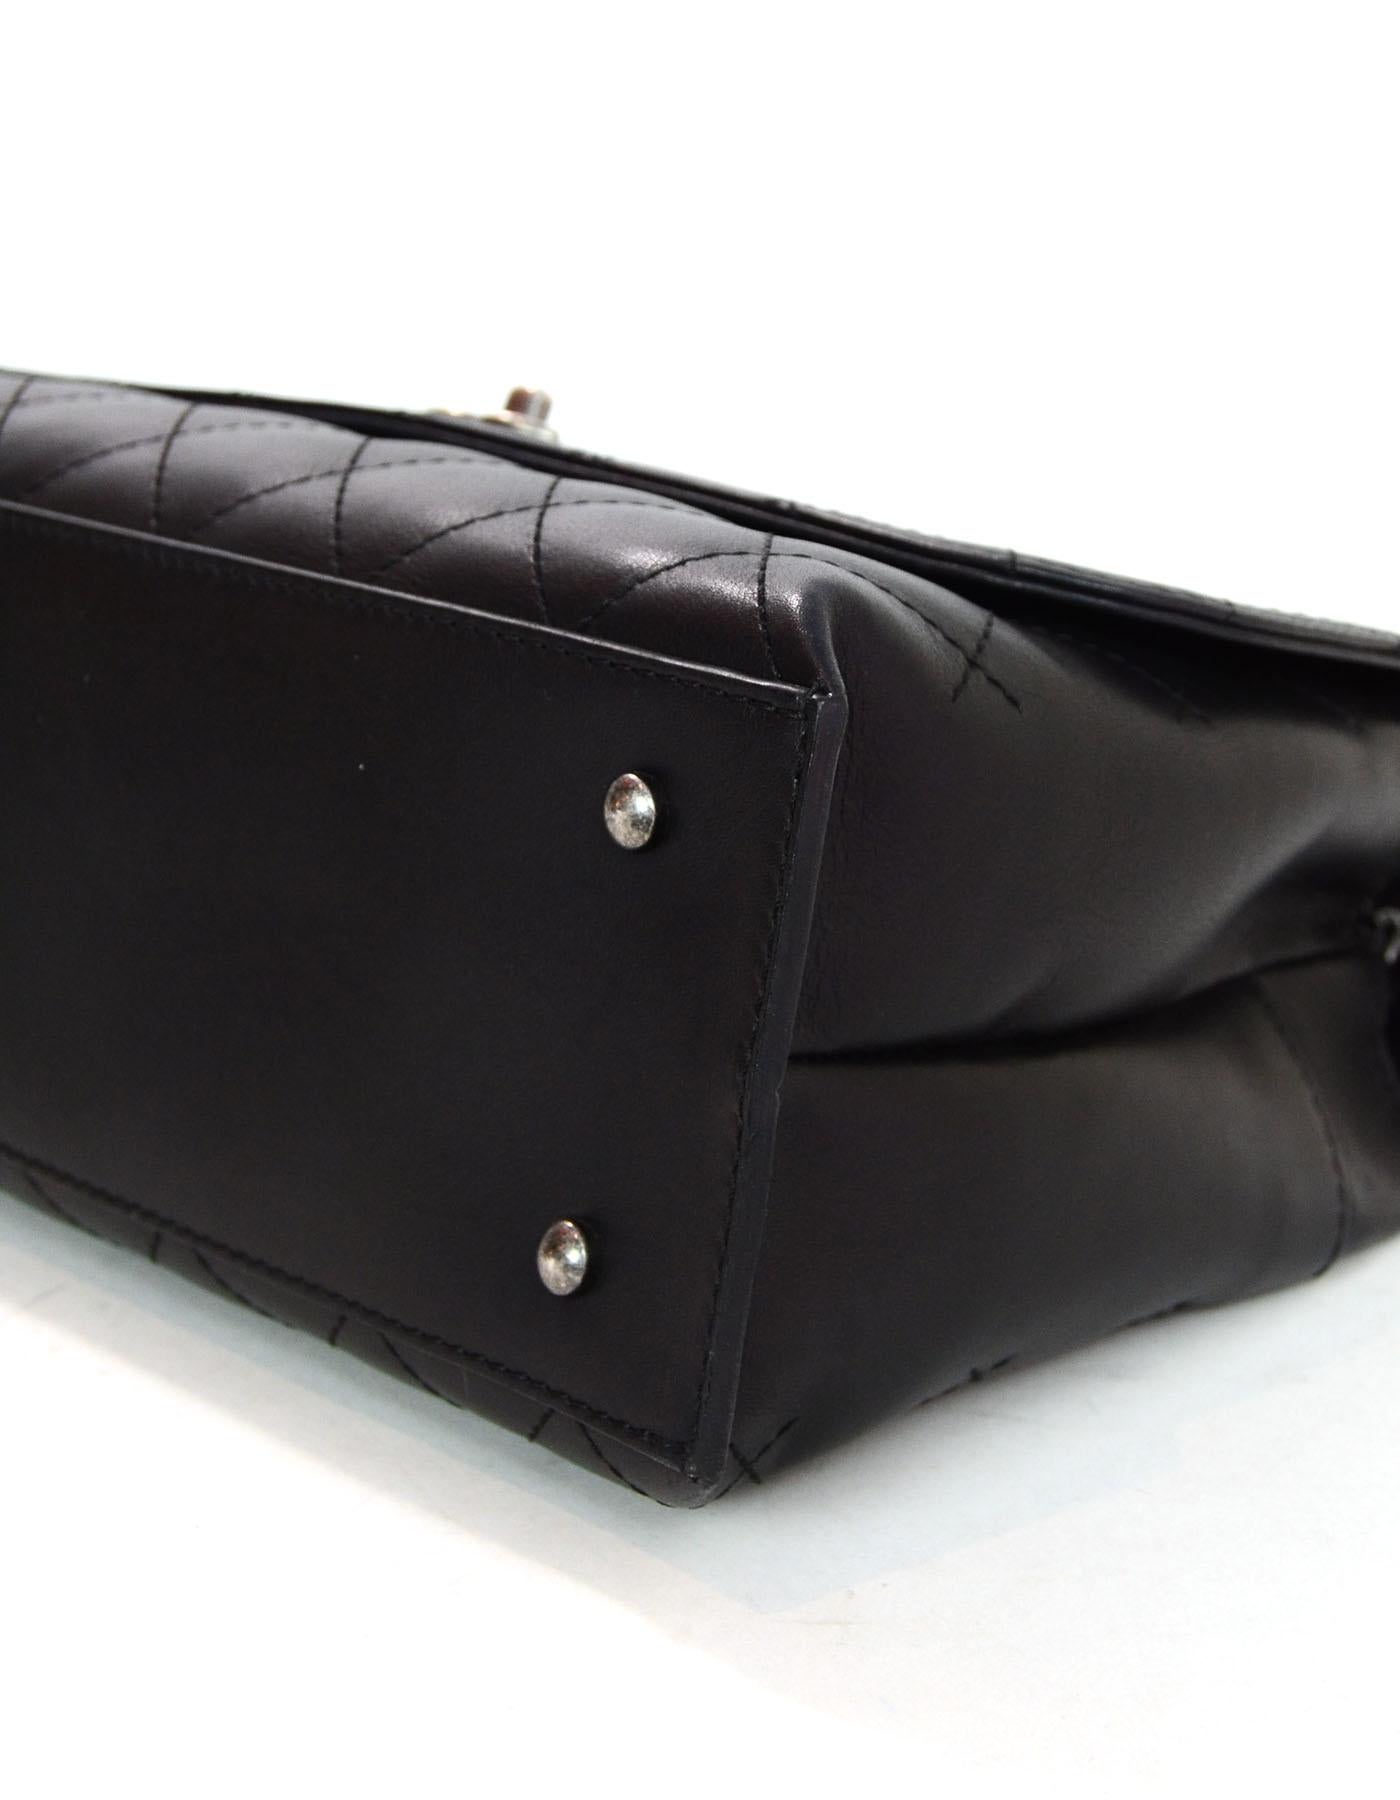 Women's Chanel Black Stitched Urban Calfskin Luxury Top Handle Bag 